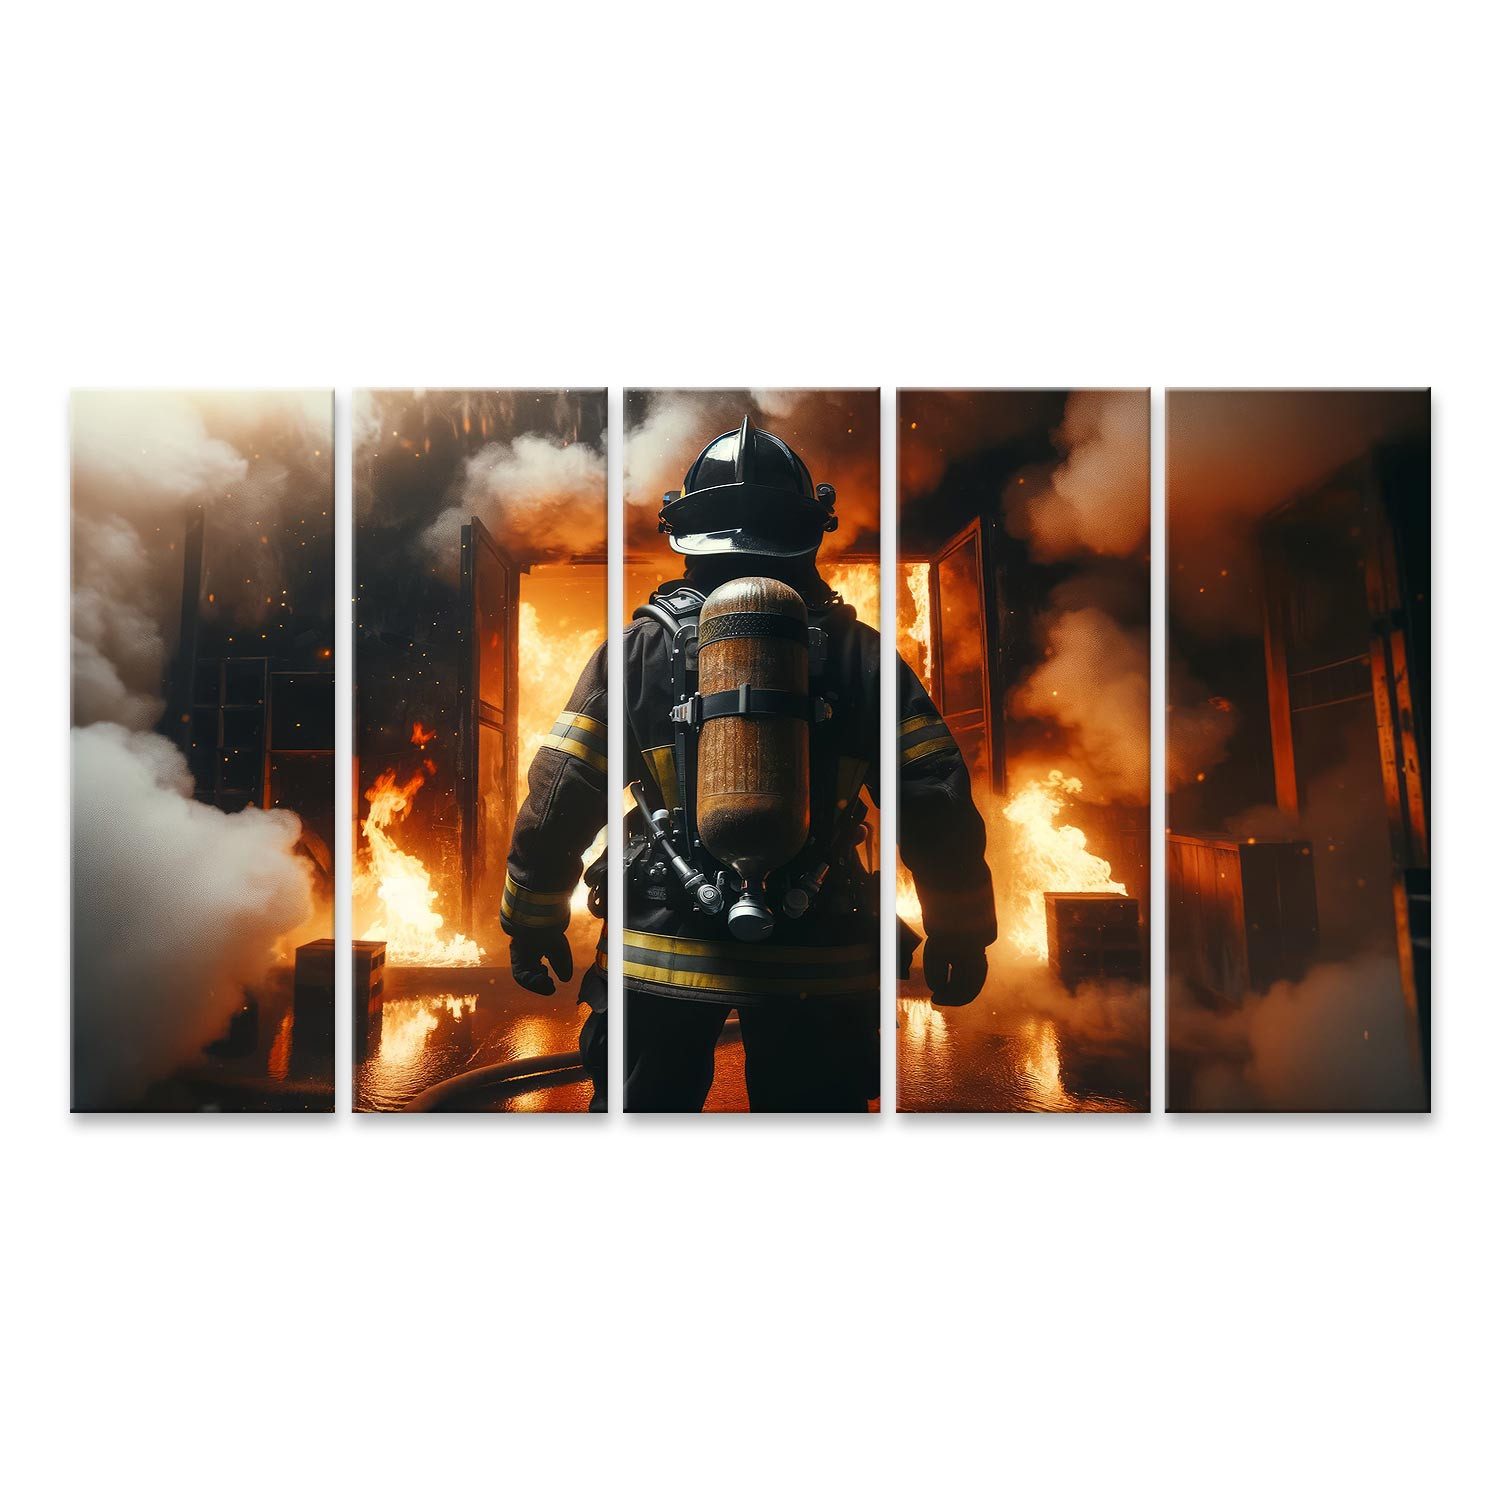 islandburner Wandbild Feuerwehrmann in Aktion - Großes Canvas Wandbild